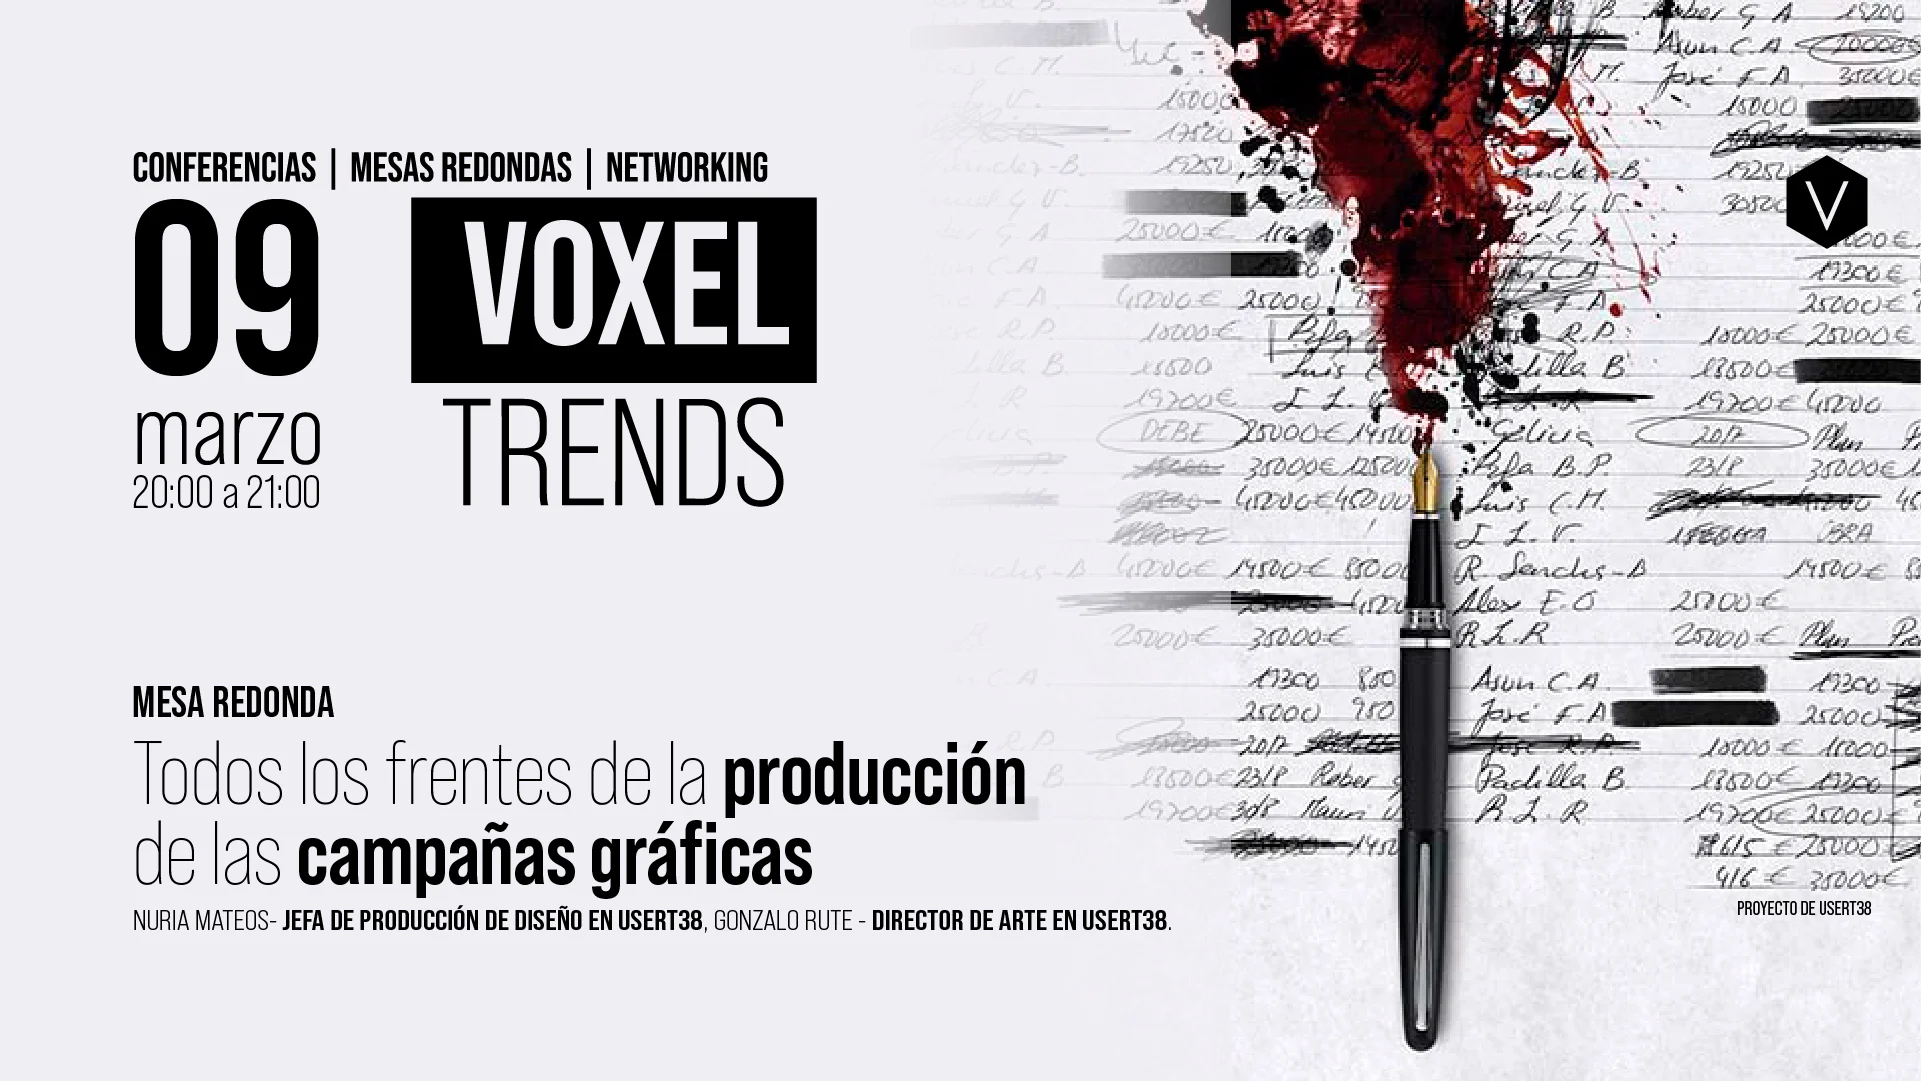 voxel_trend_marzo_mesa_redonda_4-1-1